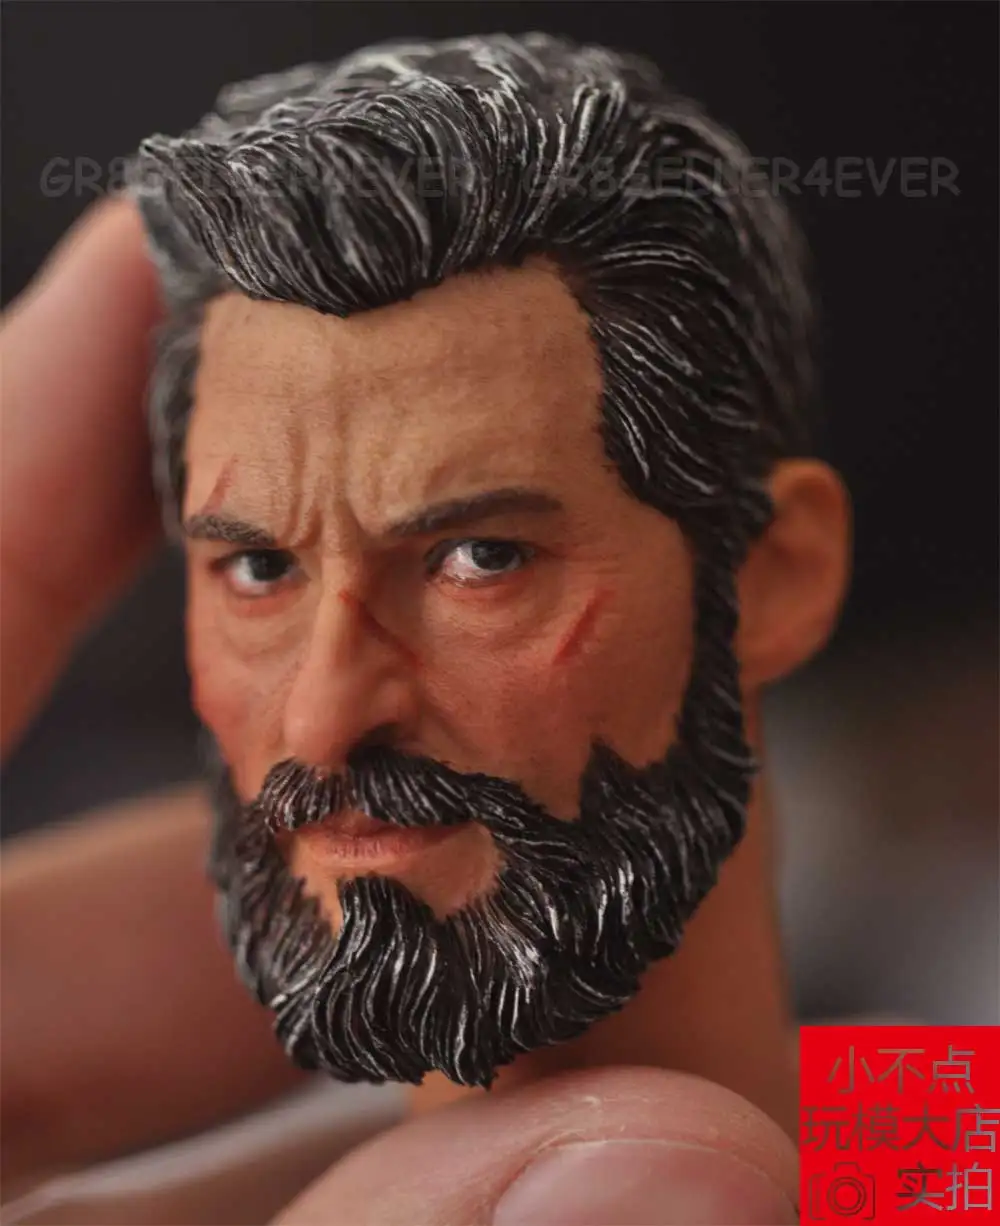 Details about   KUMIK 1/6 Male Head Sculpt Carving Model Logan Model Toy for 12" Action Figure 